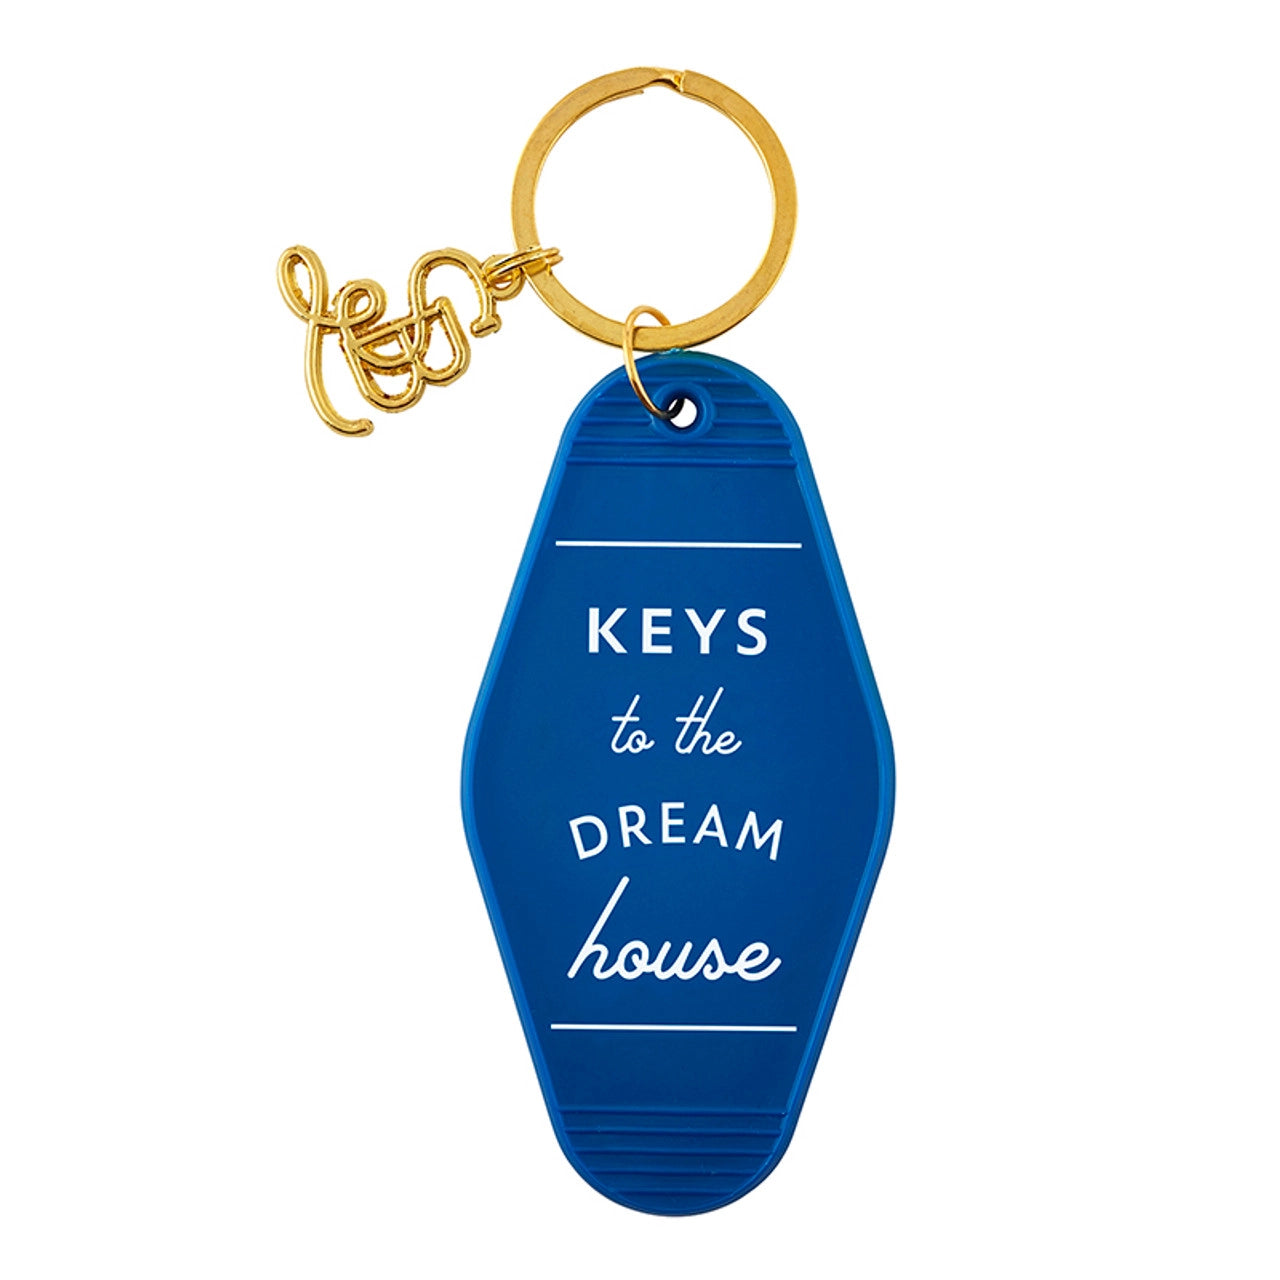 Keys To The Dream House Keychain